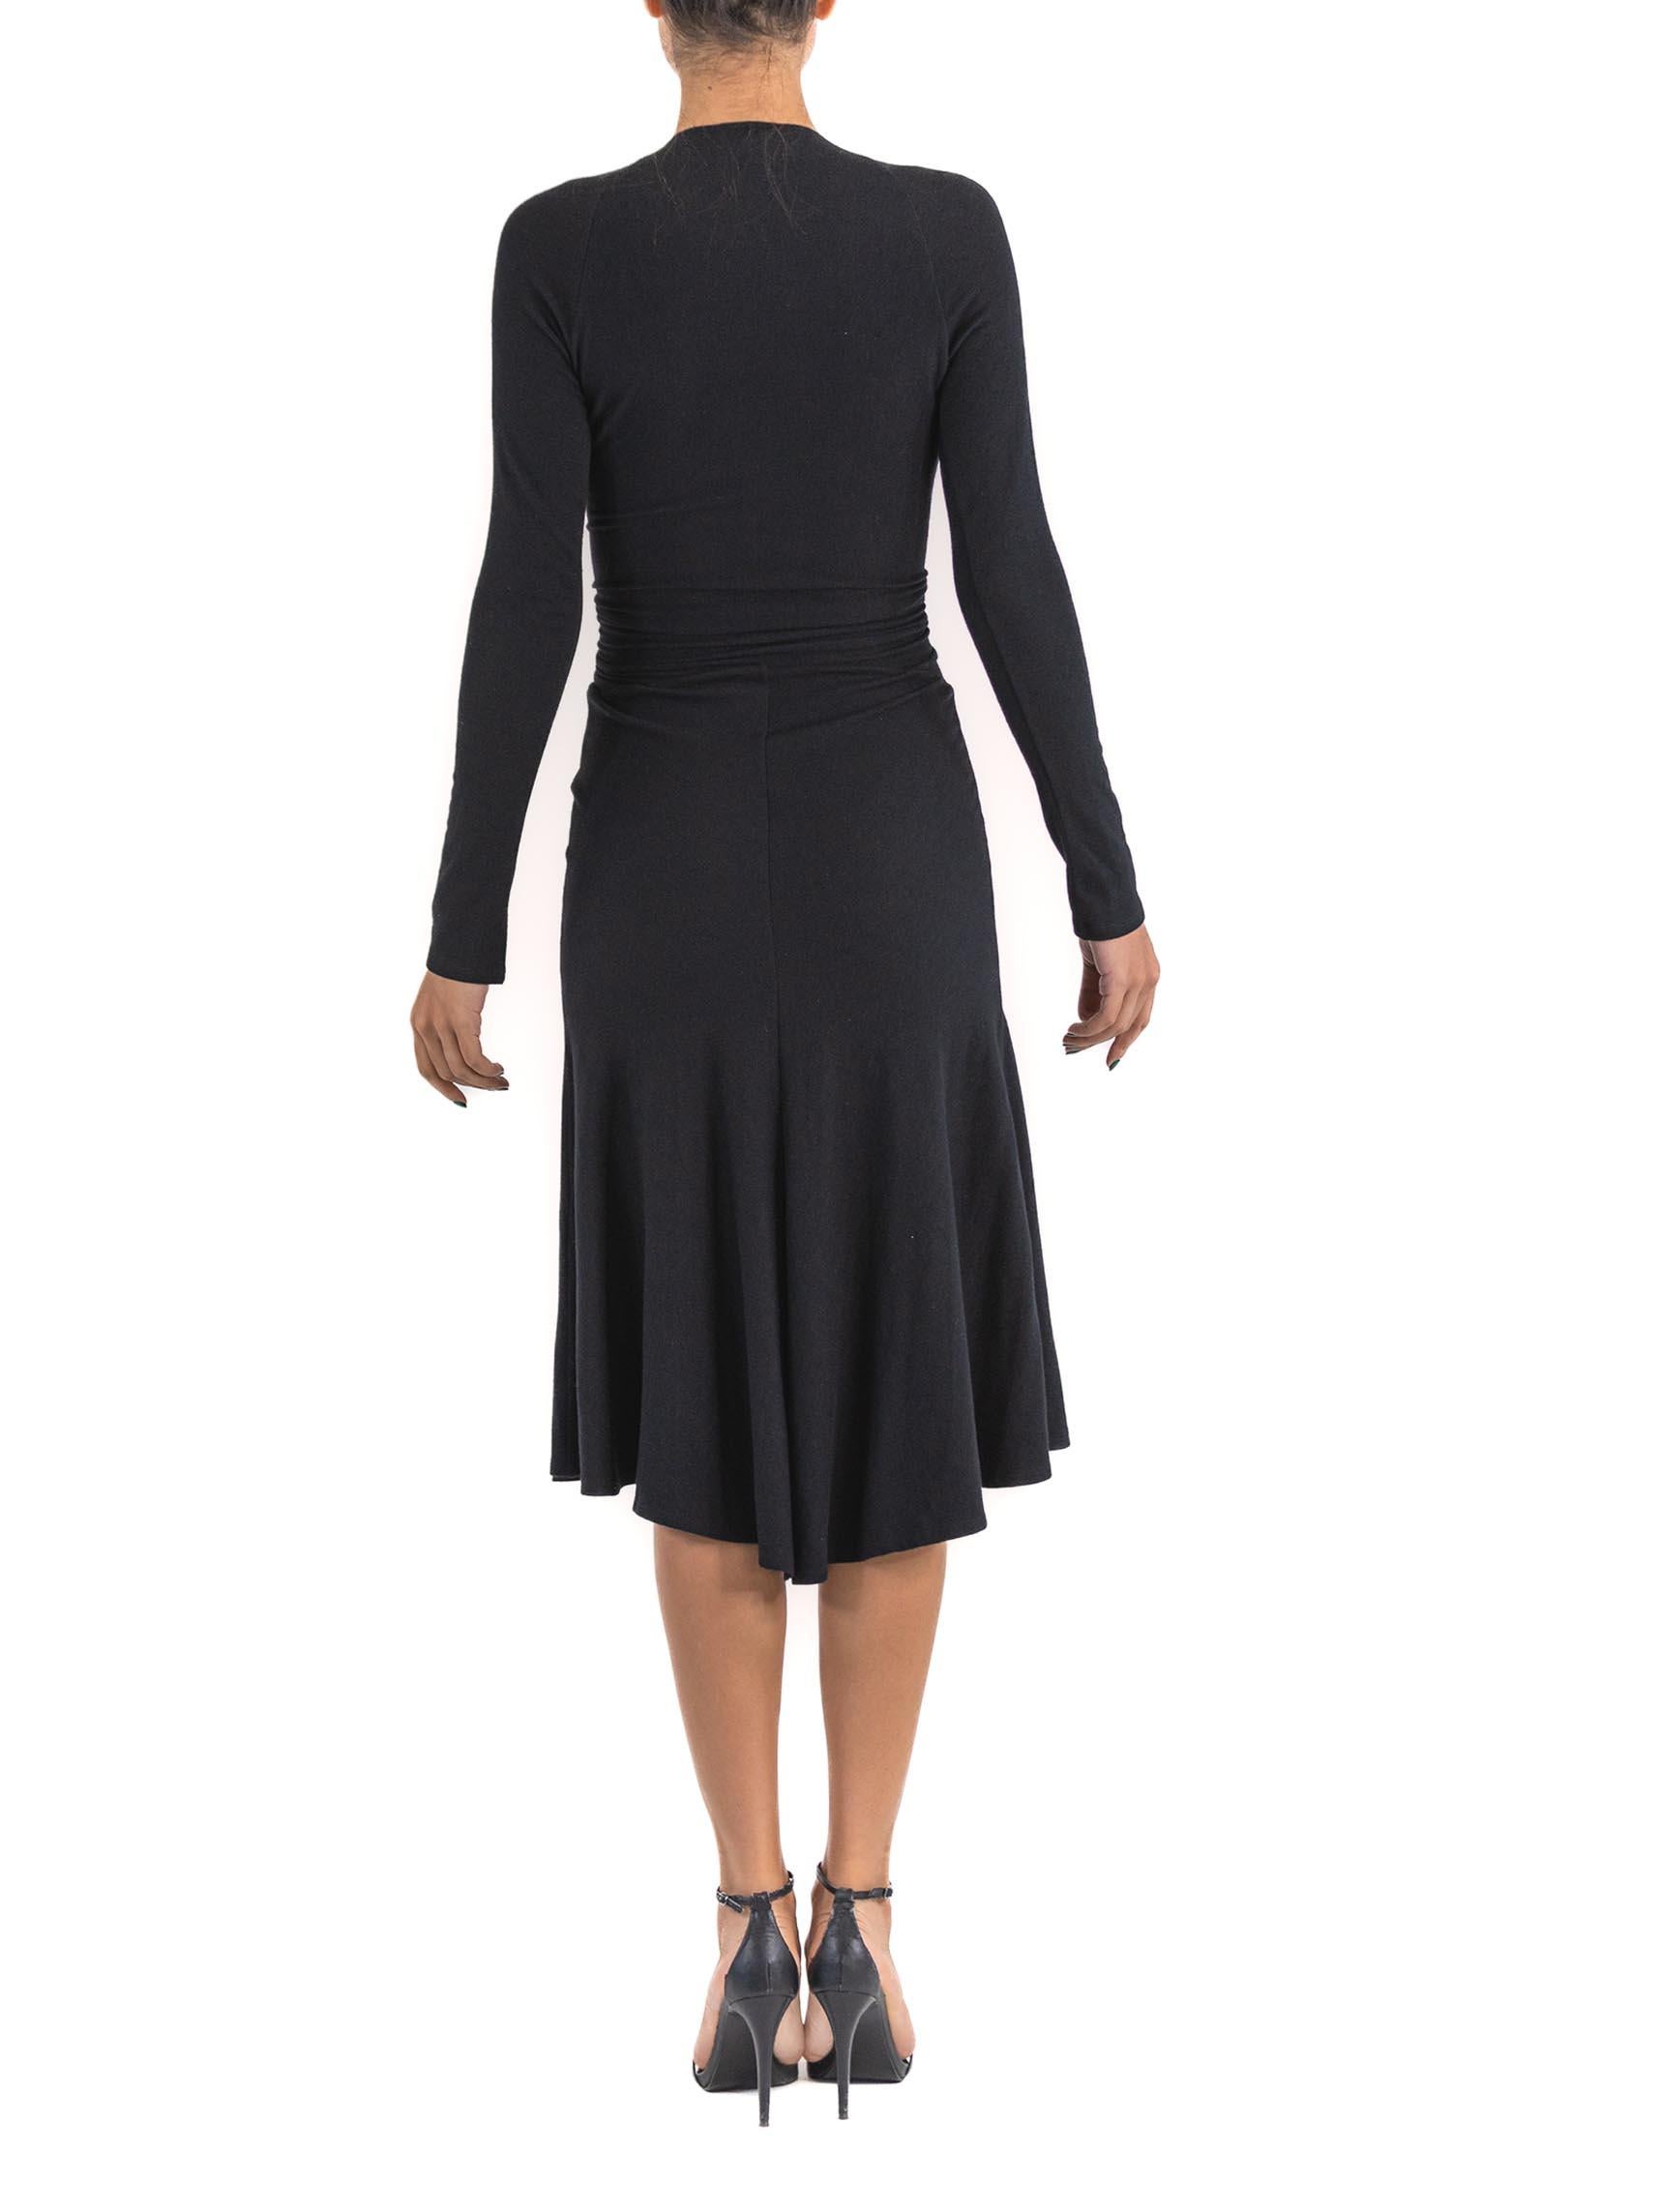 Women's 1990S DONNA KARAN Black Wool Jersey Deeep V Neckline Tie Front Dress With Sleev For Sale